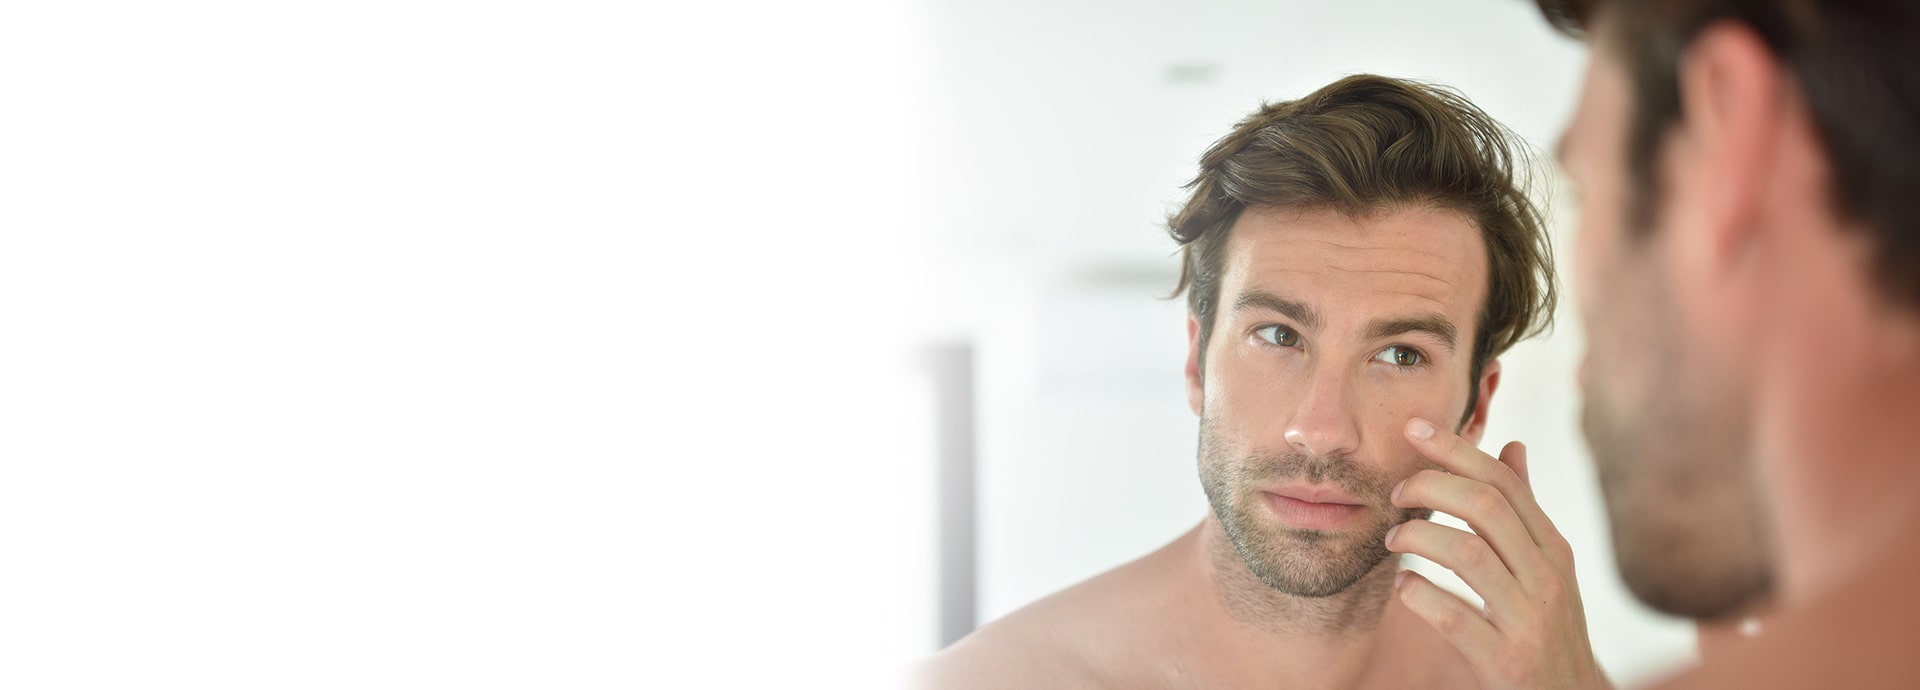 Facial Cosmetic Plastic Surgery for Men